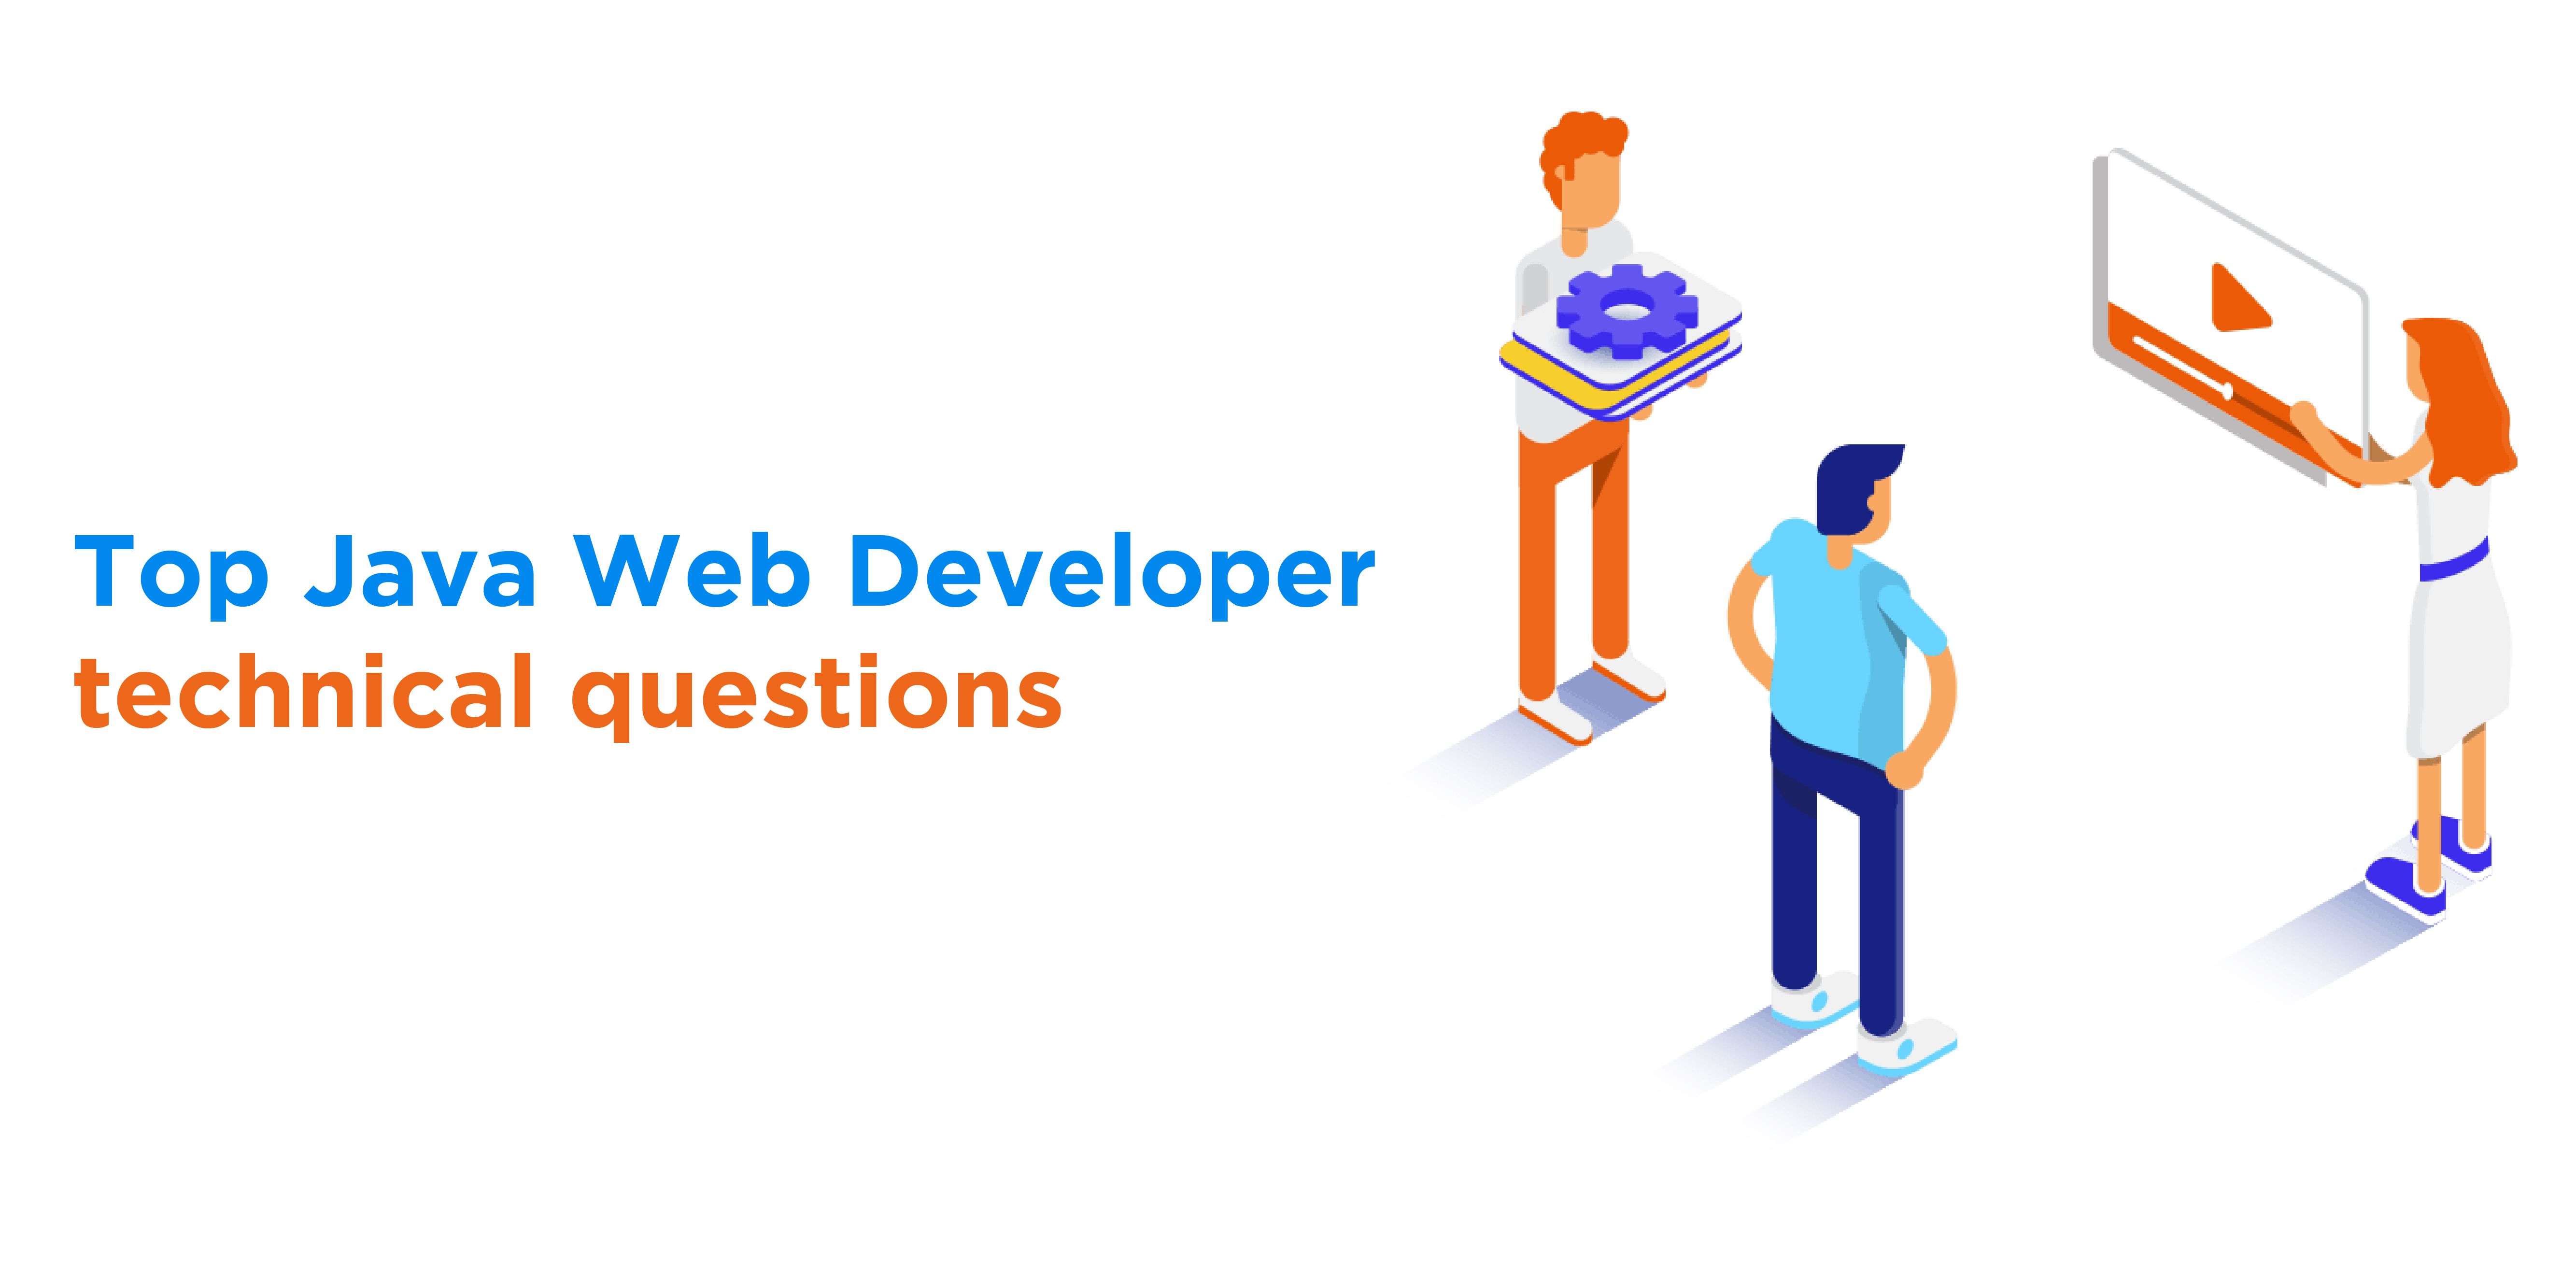 Top Java Web Developer technical questions